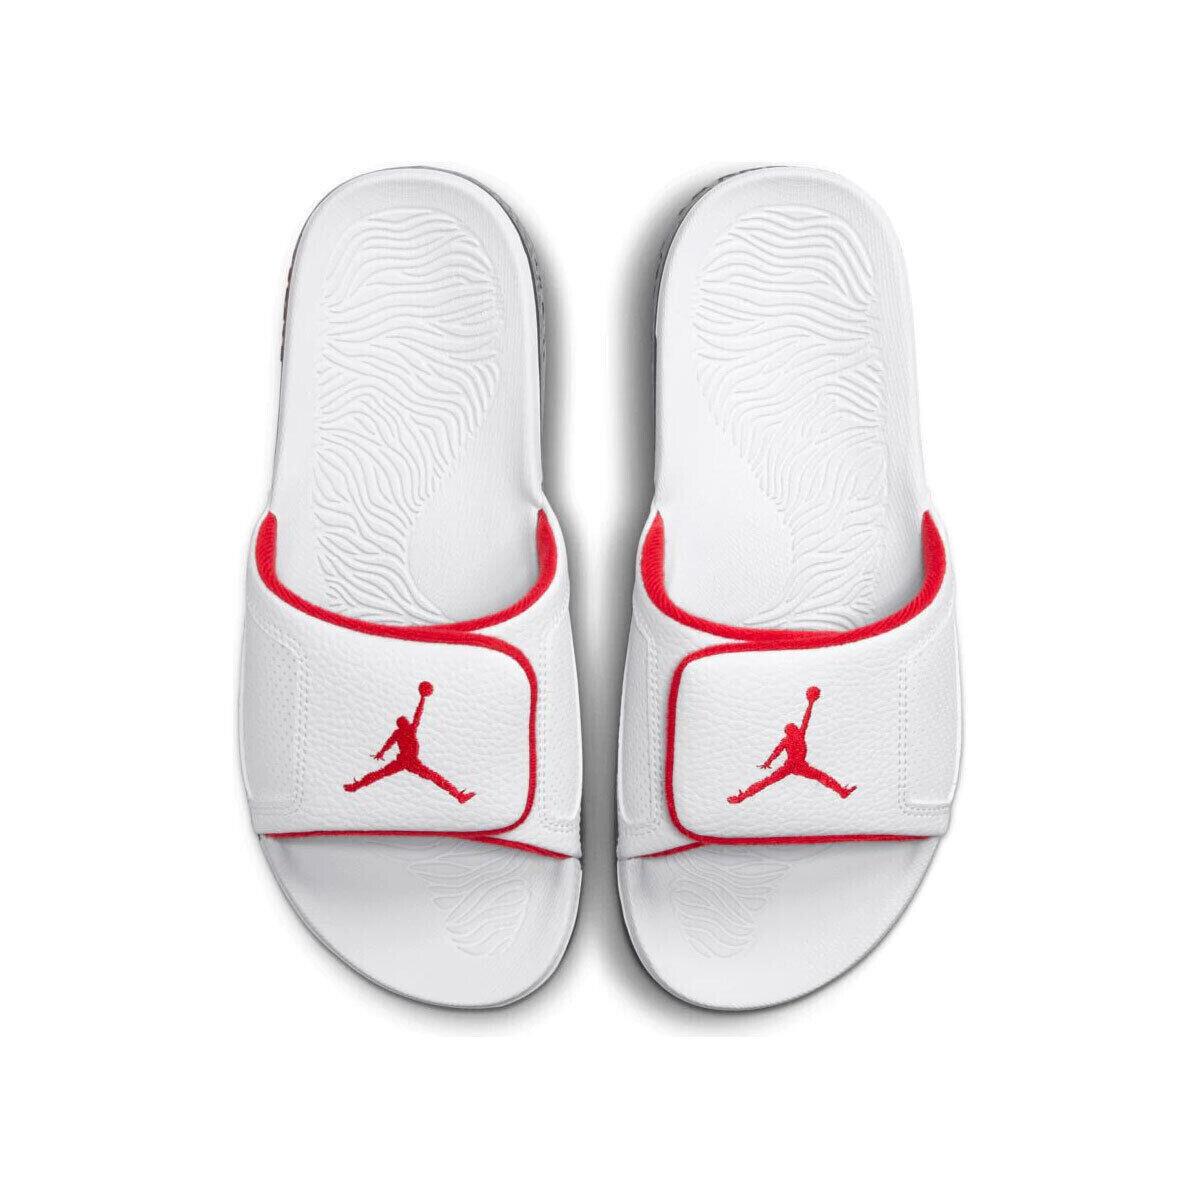 Nike Air Jordan Hydro Iii 3 Retro White Red Slides 854556 103 - Size 12 Mens